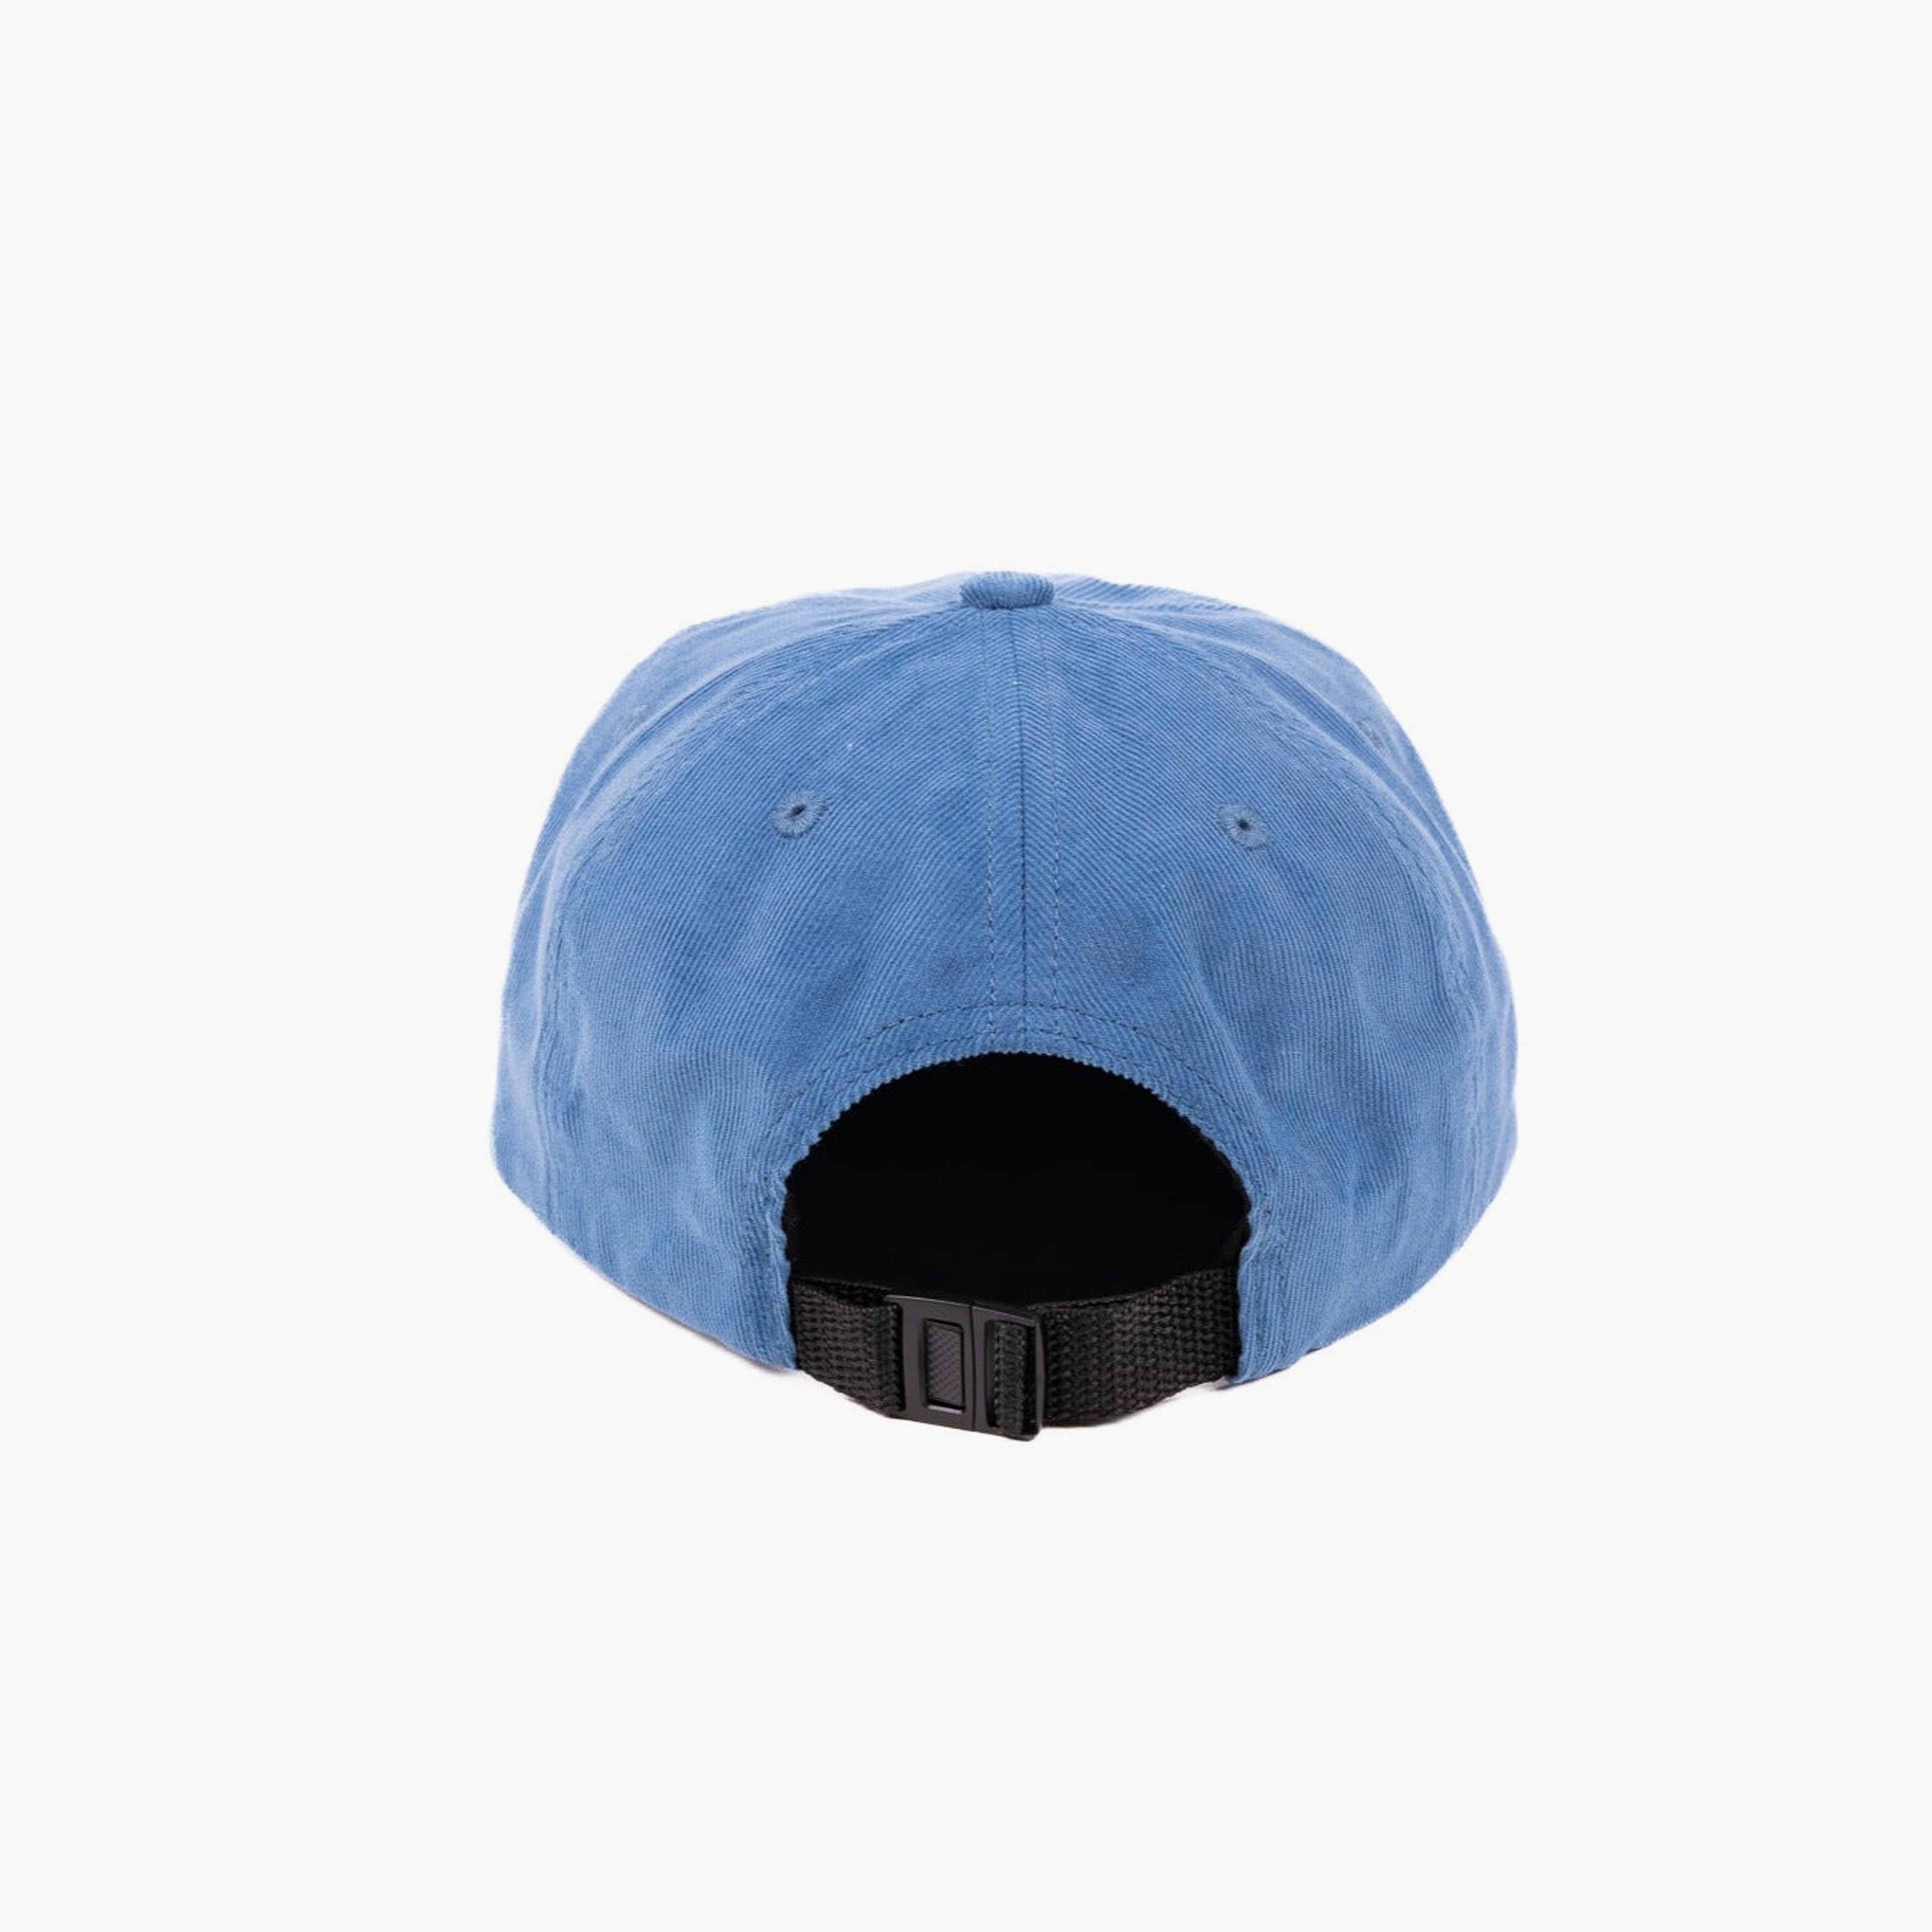 High On Earth hat - Blue Corduroy